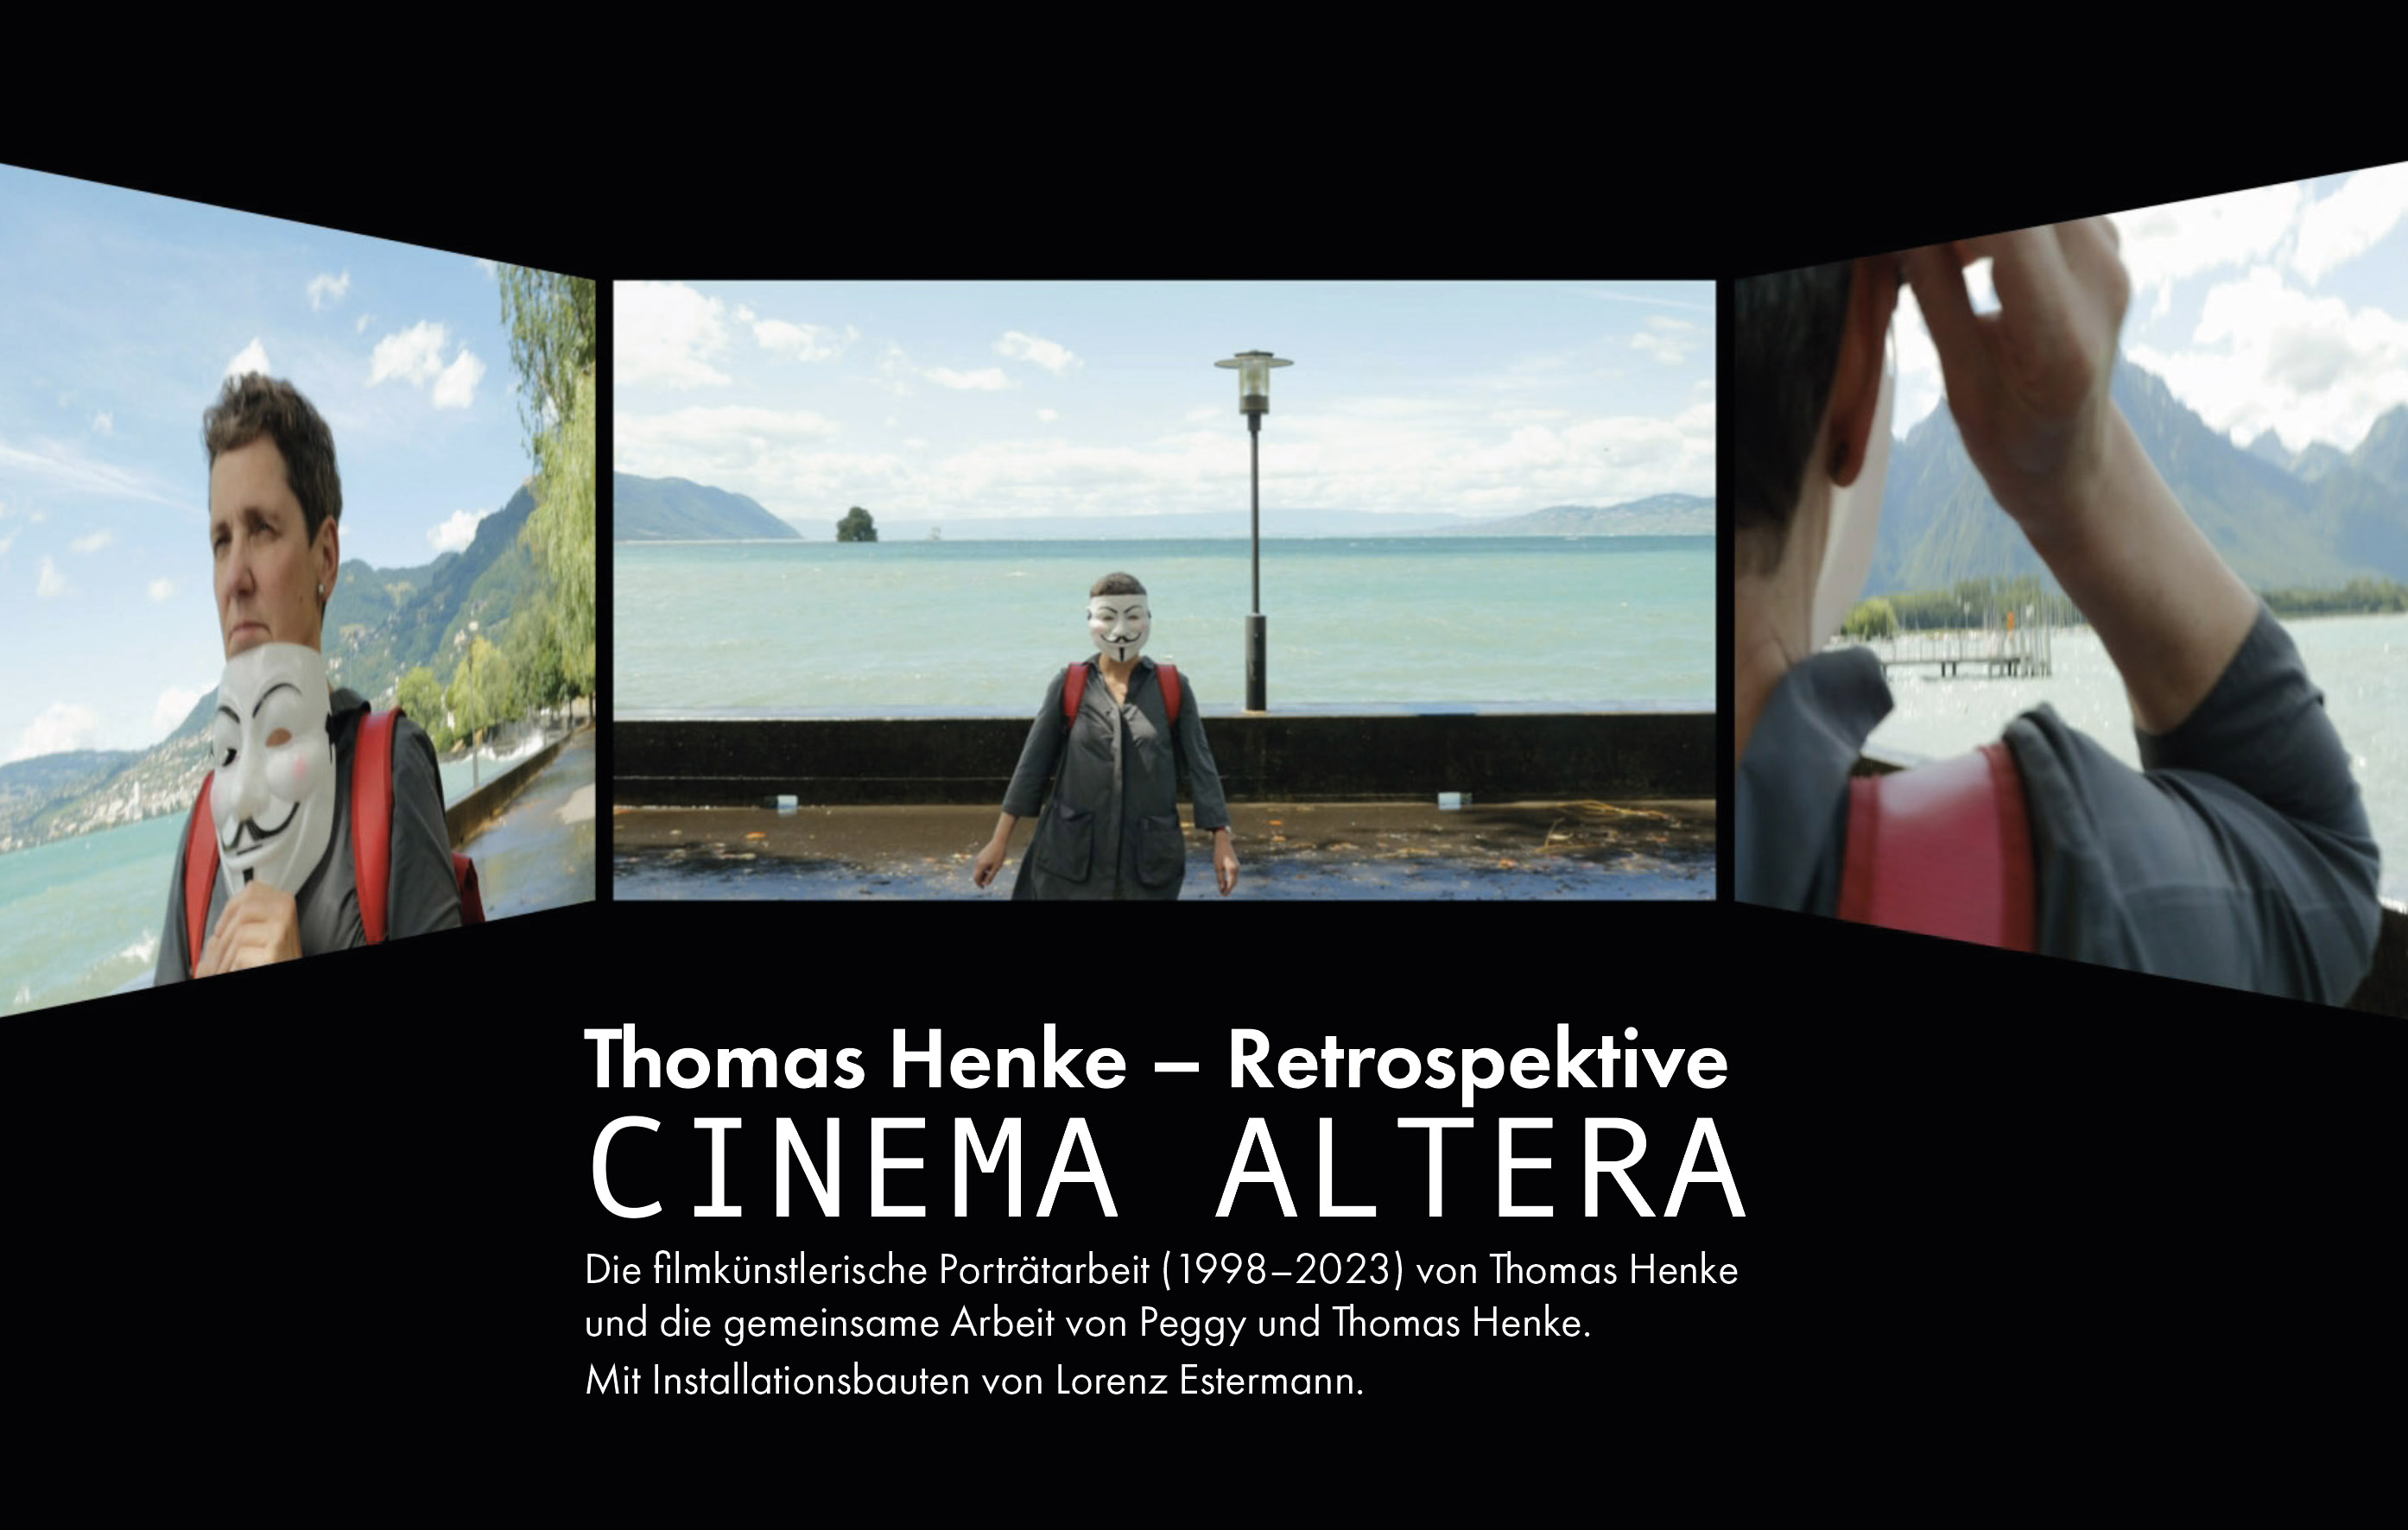 CINEMA ALTERA, Thomas Henke - Retrospektive